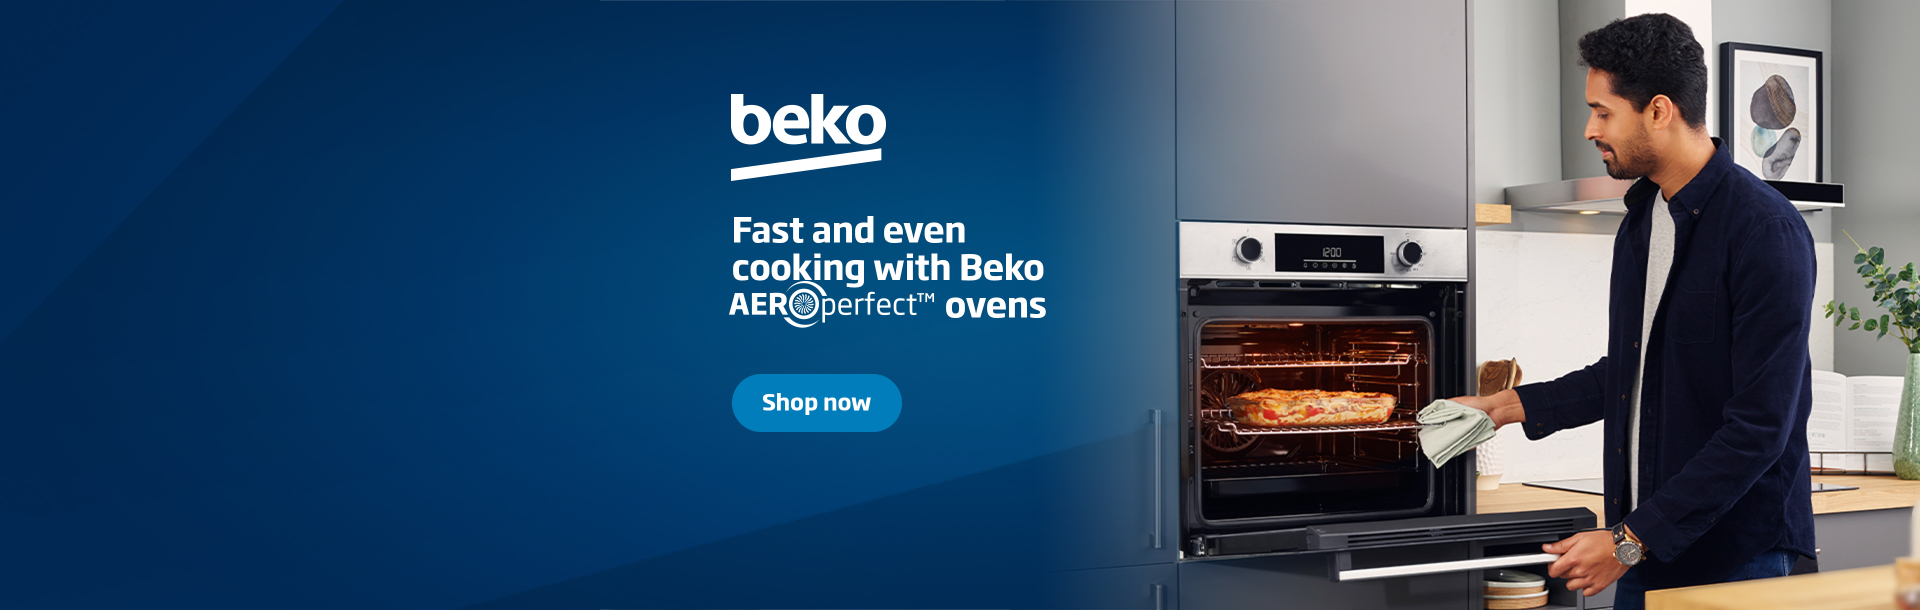 Beko Aero Perfect Ovens